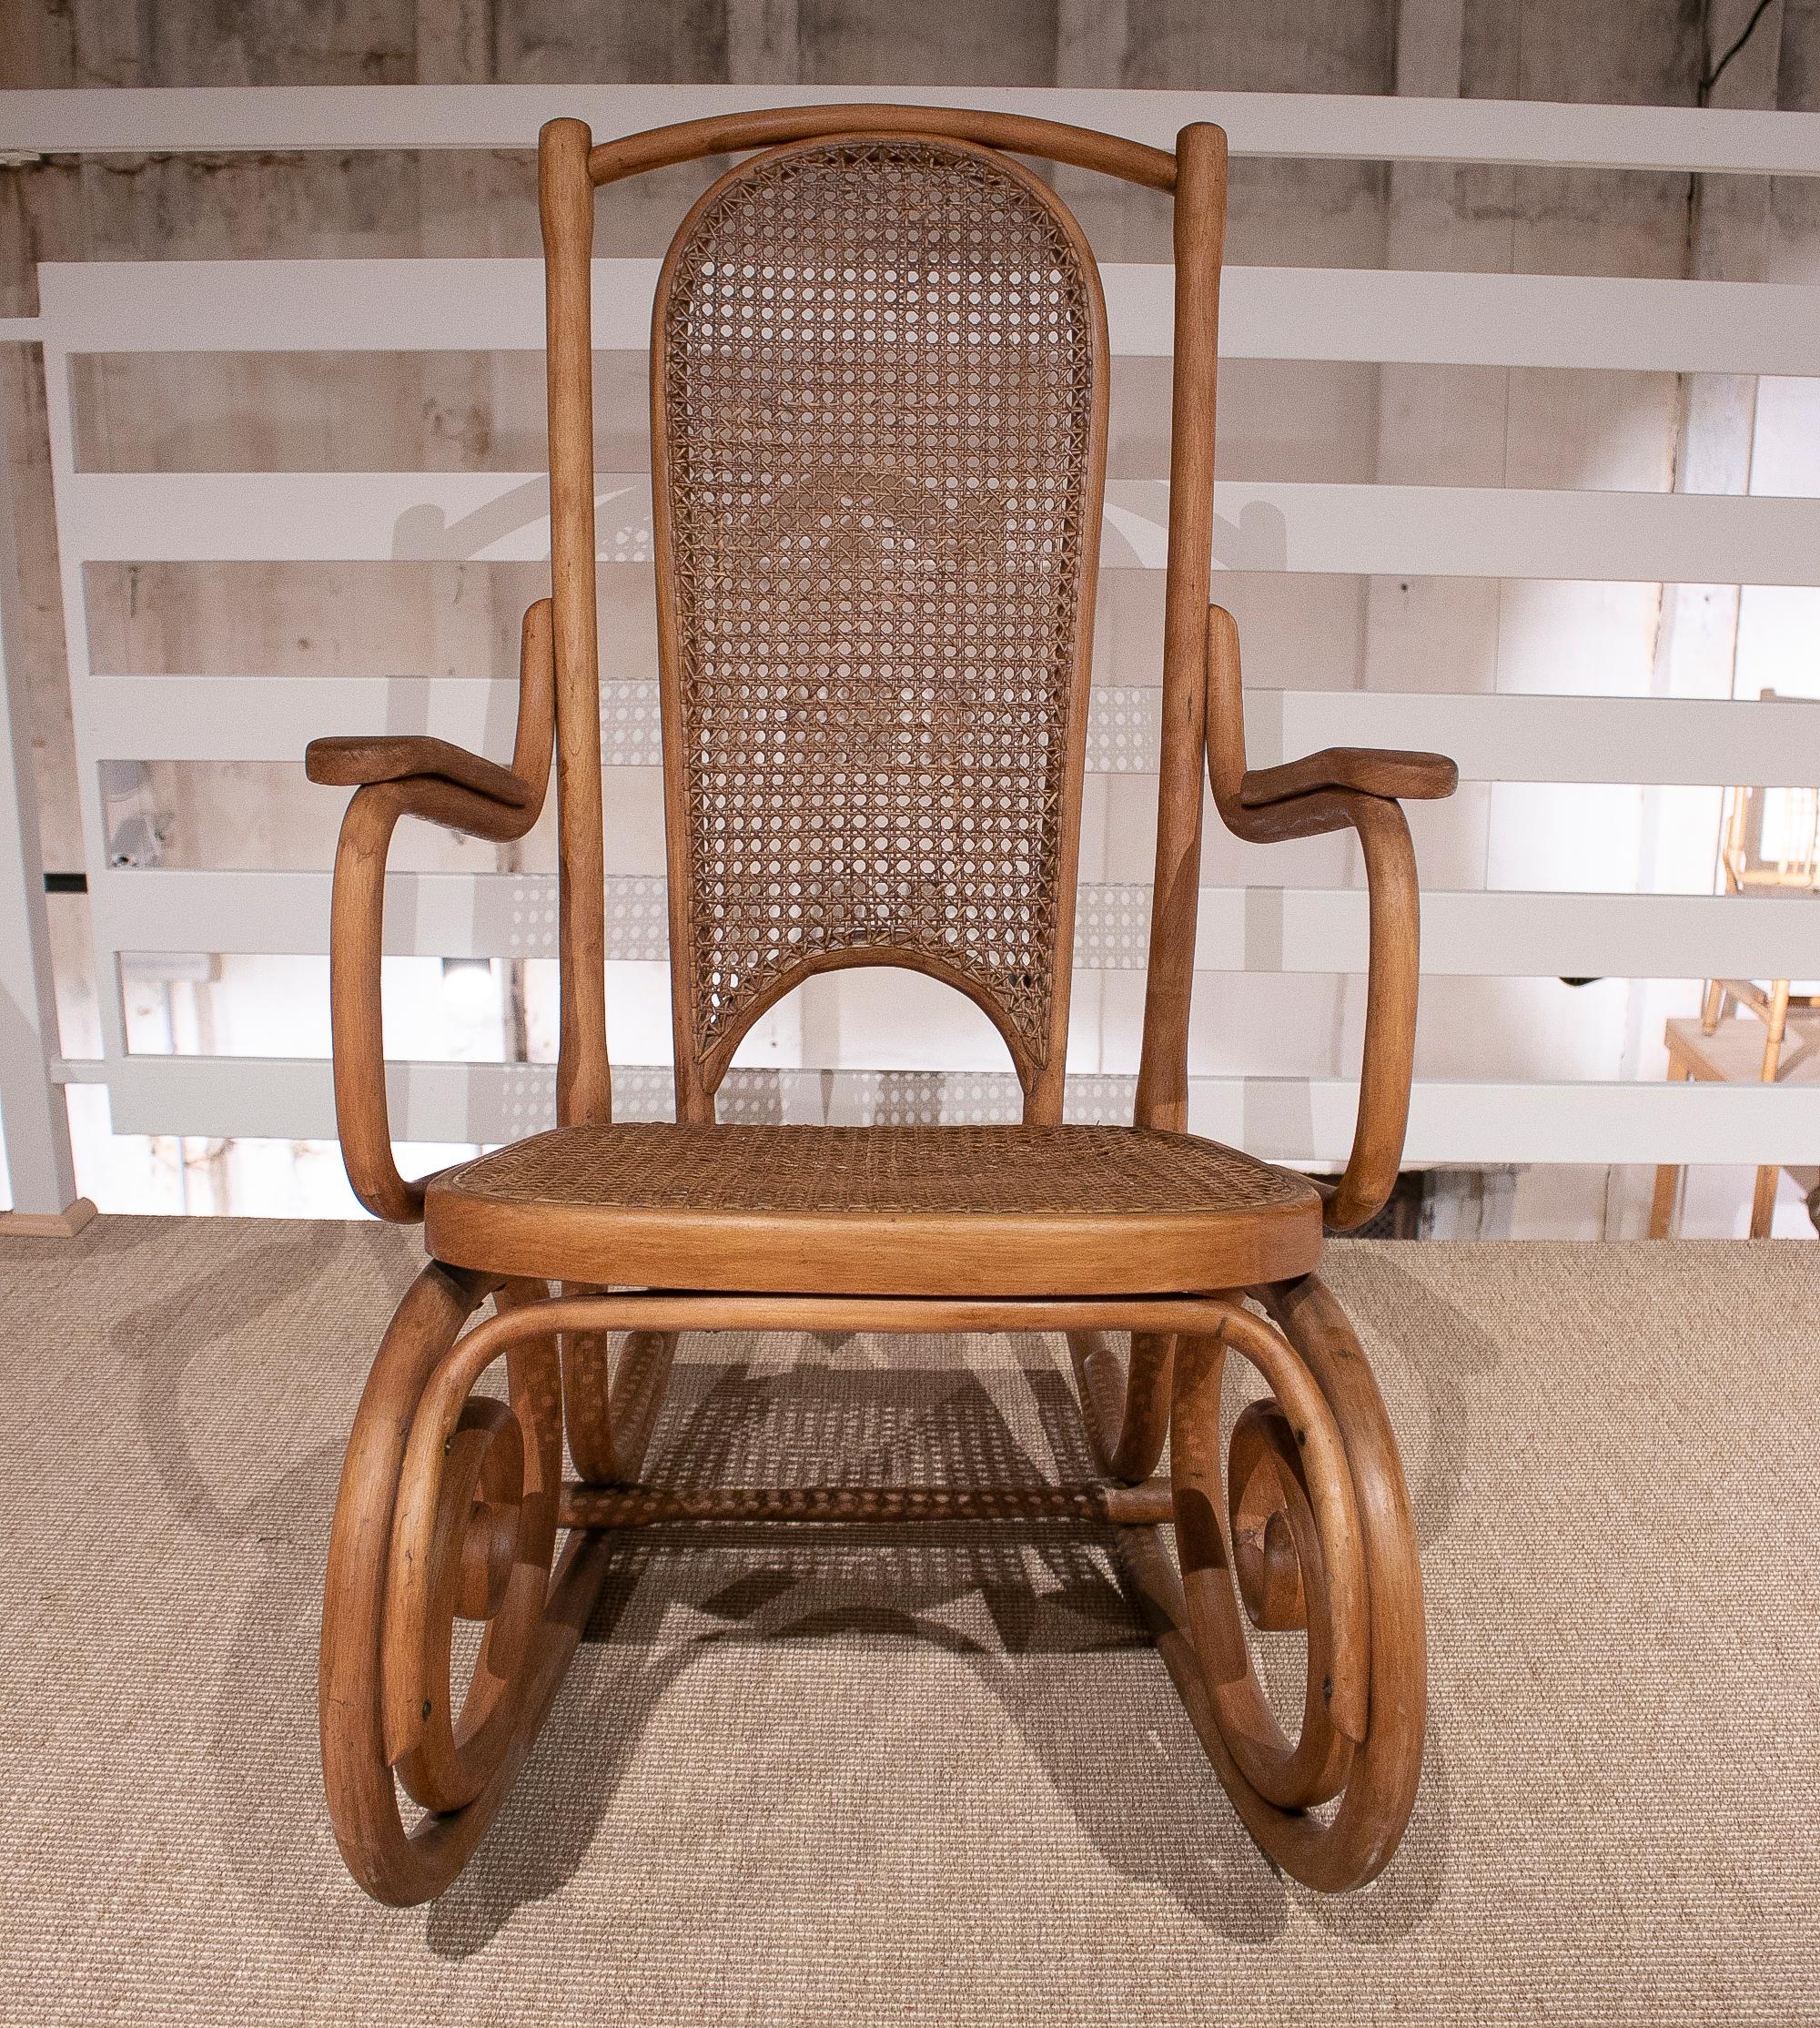 1950s Spanish hand woven wicker wooden rocking chair.